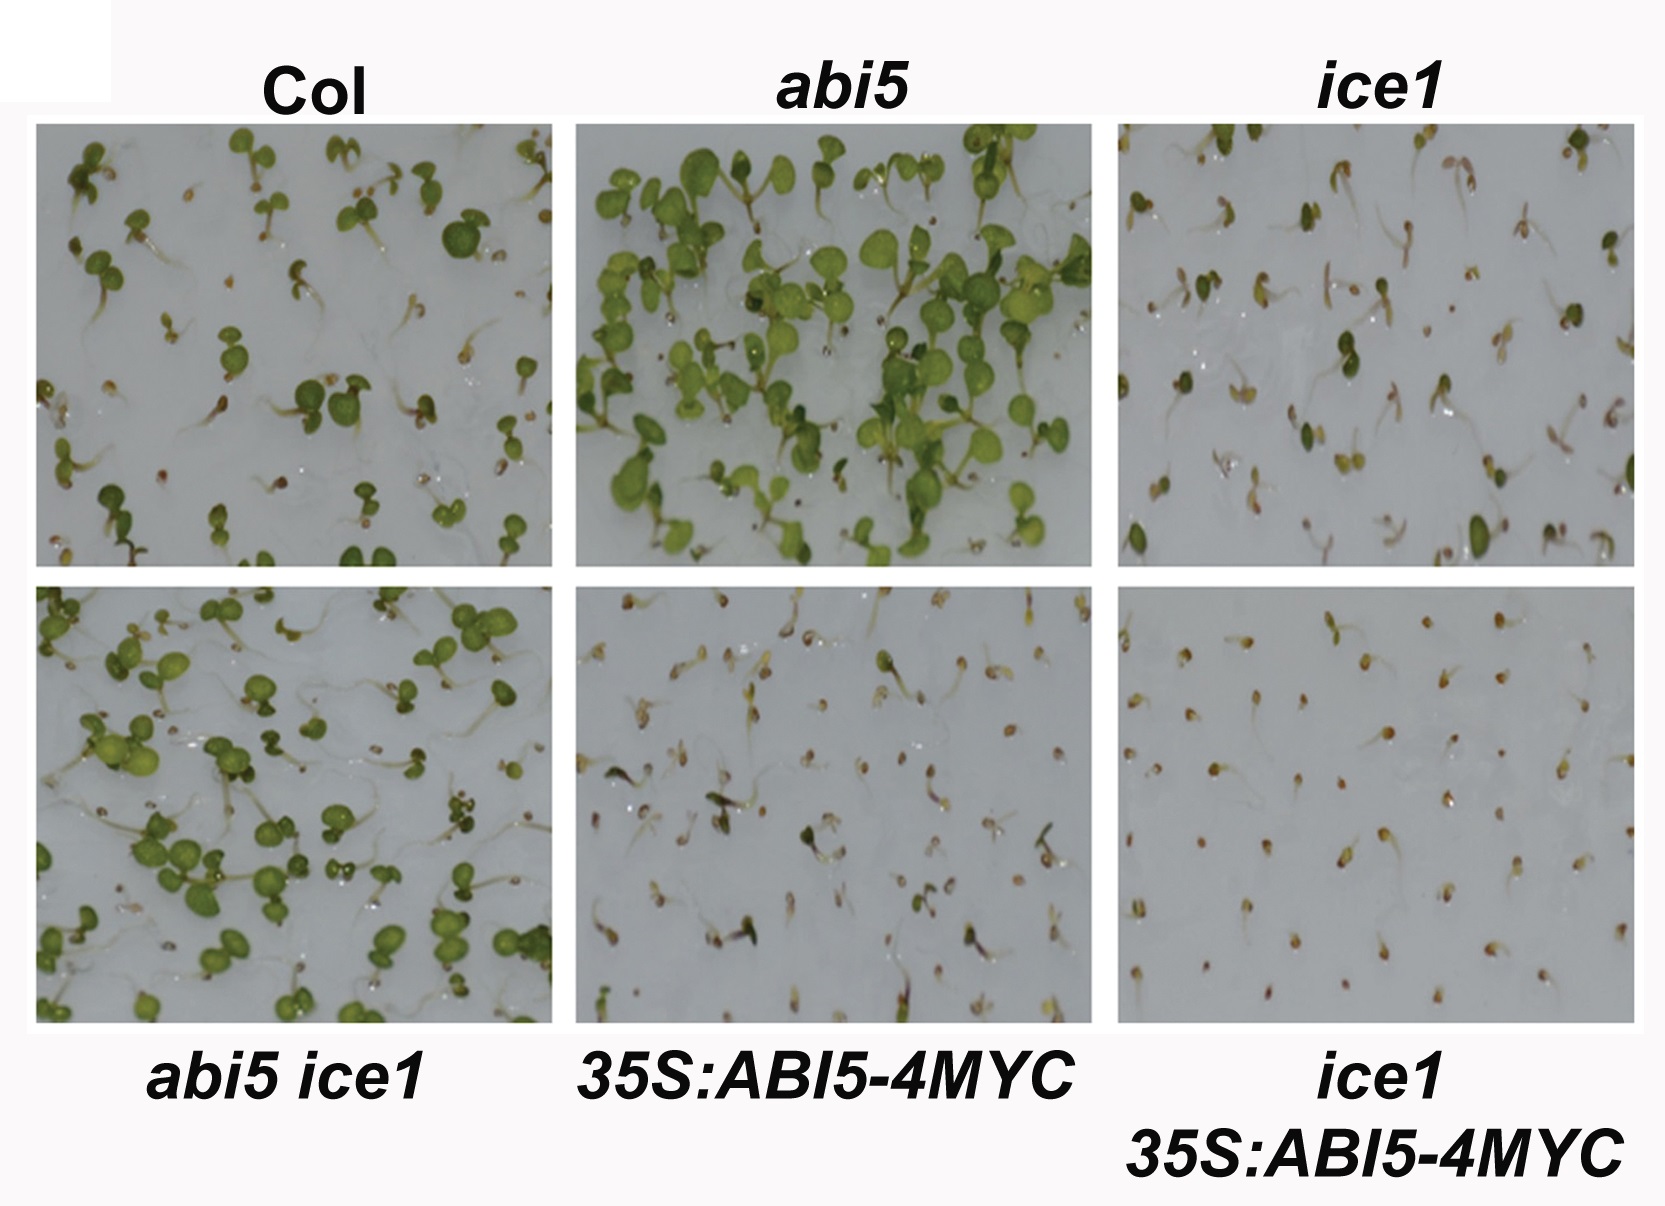 Study Sheds Light on Molecular Regulation of Phytohormone Abscisic Acid Signaling during Seed Germination